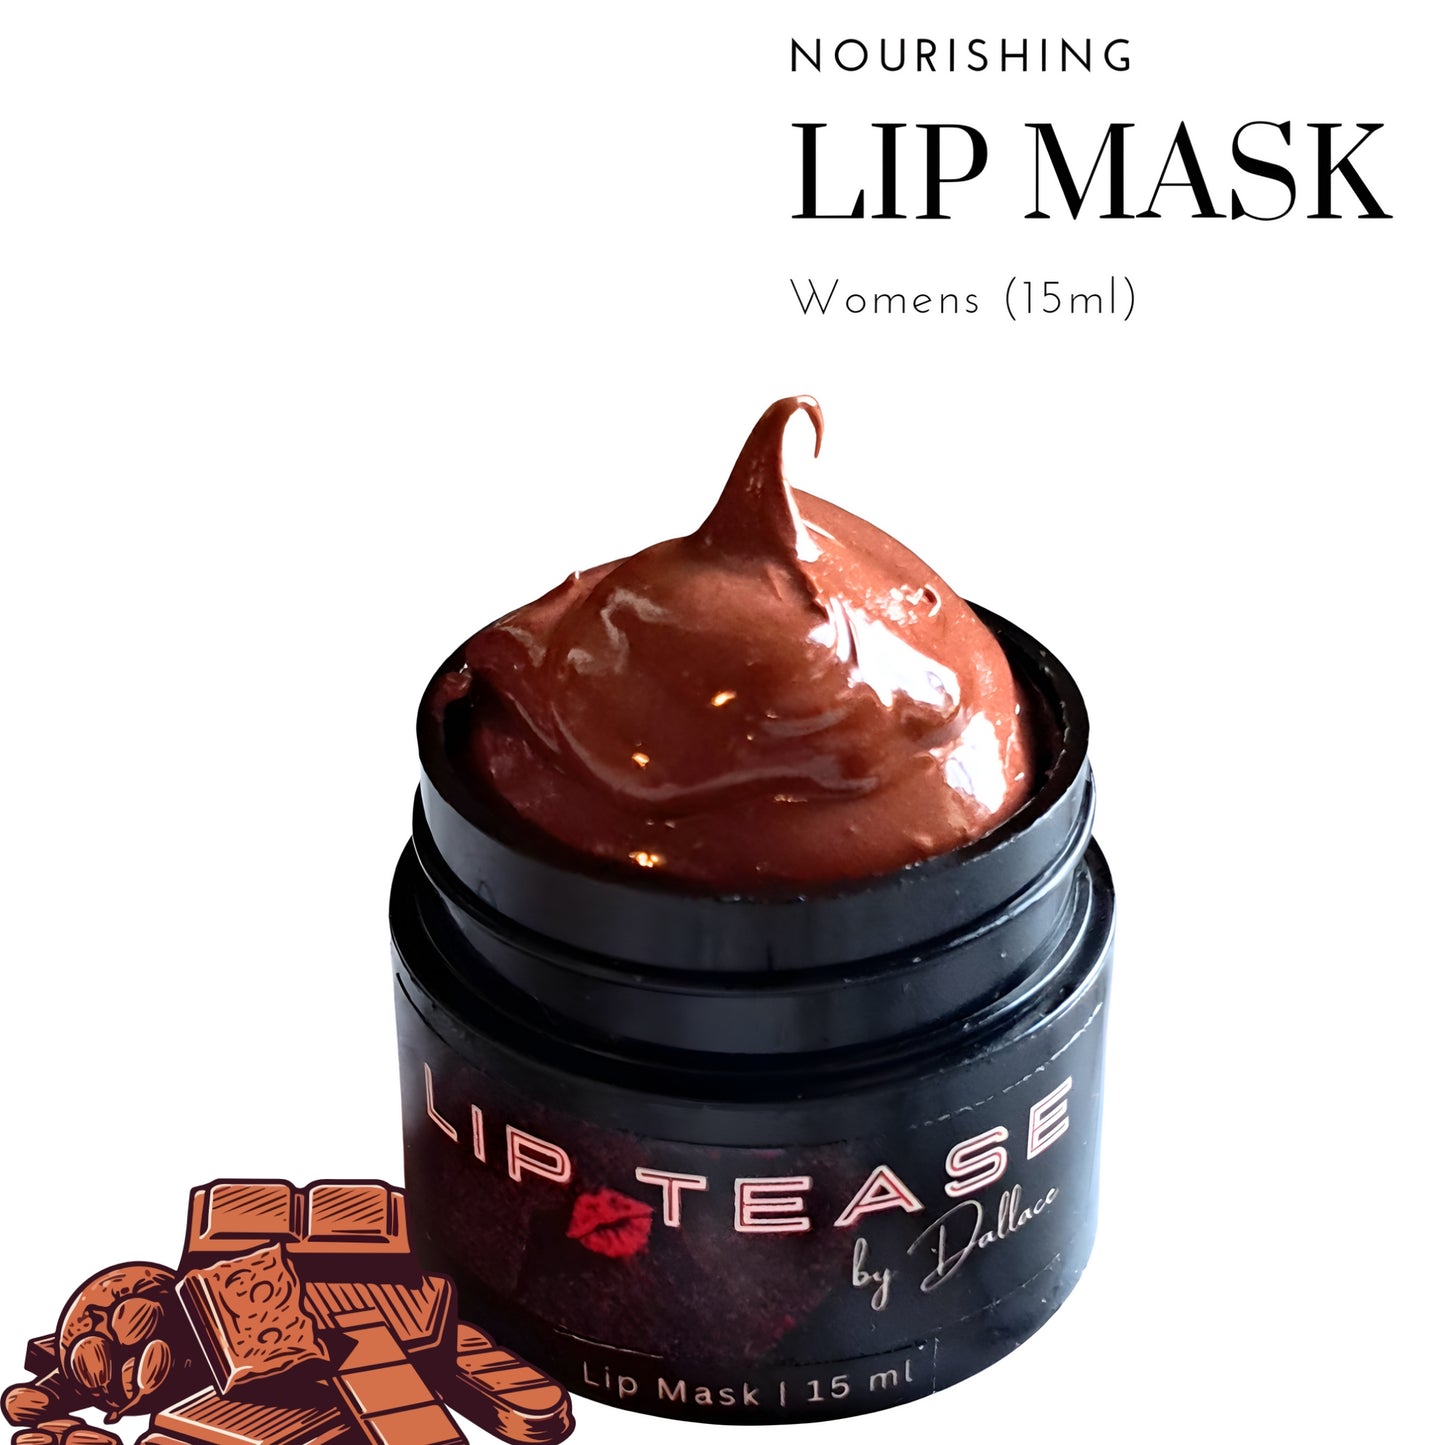 Nourishing Lip Mask Lip Mask Lip Tease by Dallace  Chocoholic Dream Mini Mask (10ml) Overnight Sleeping Mask 